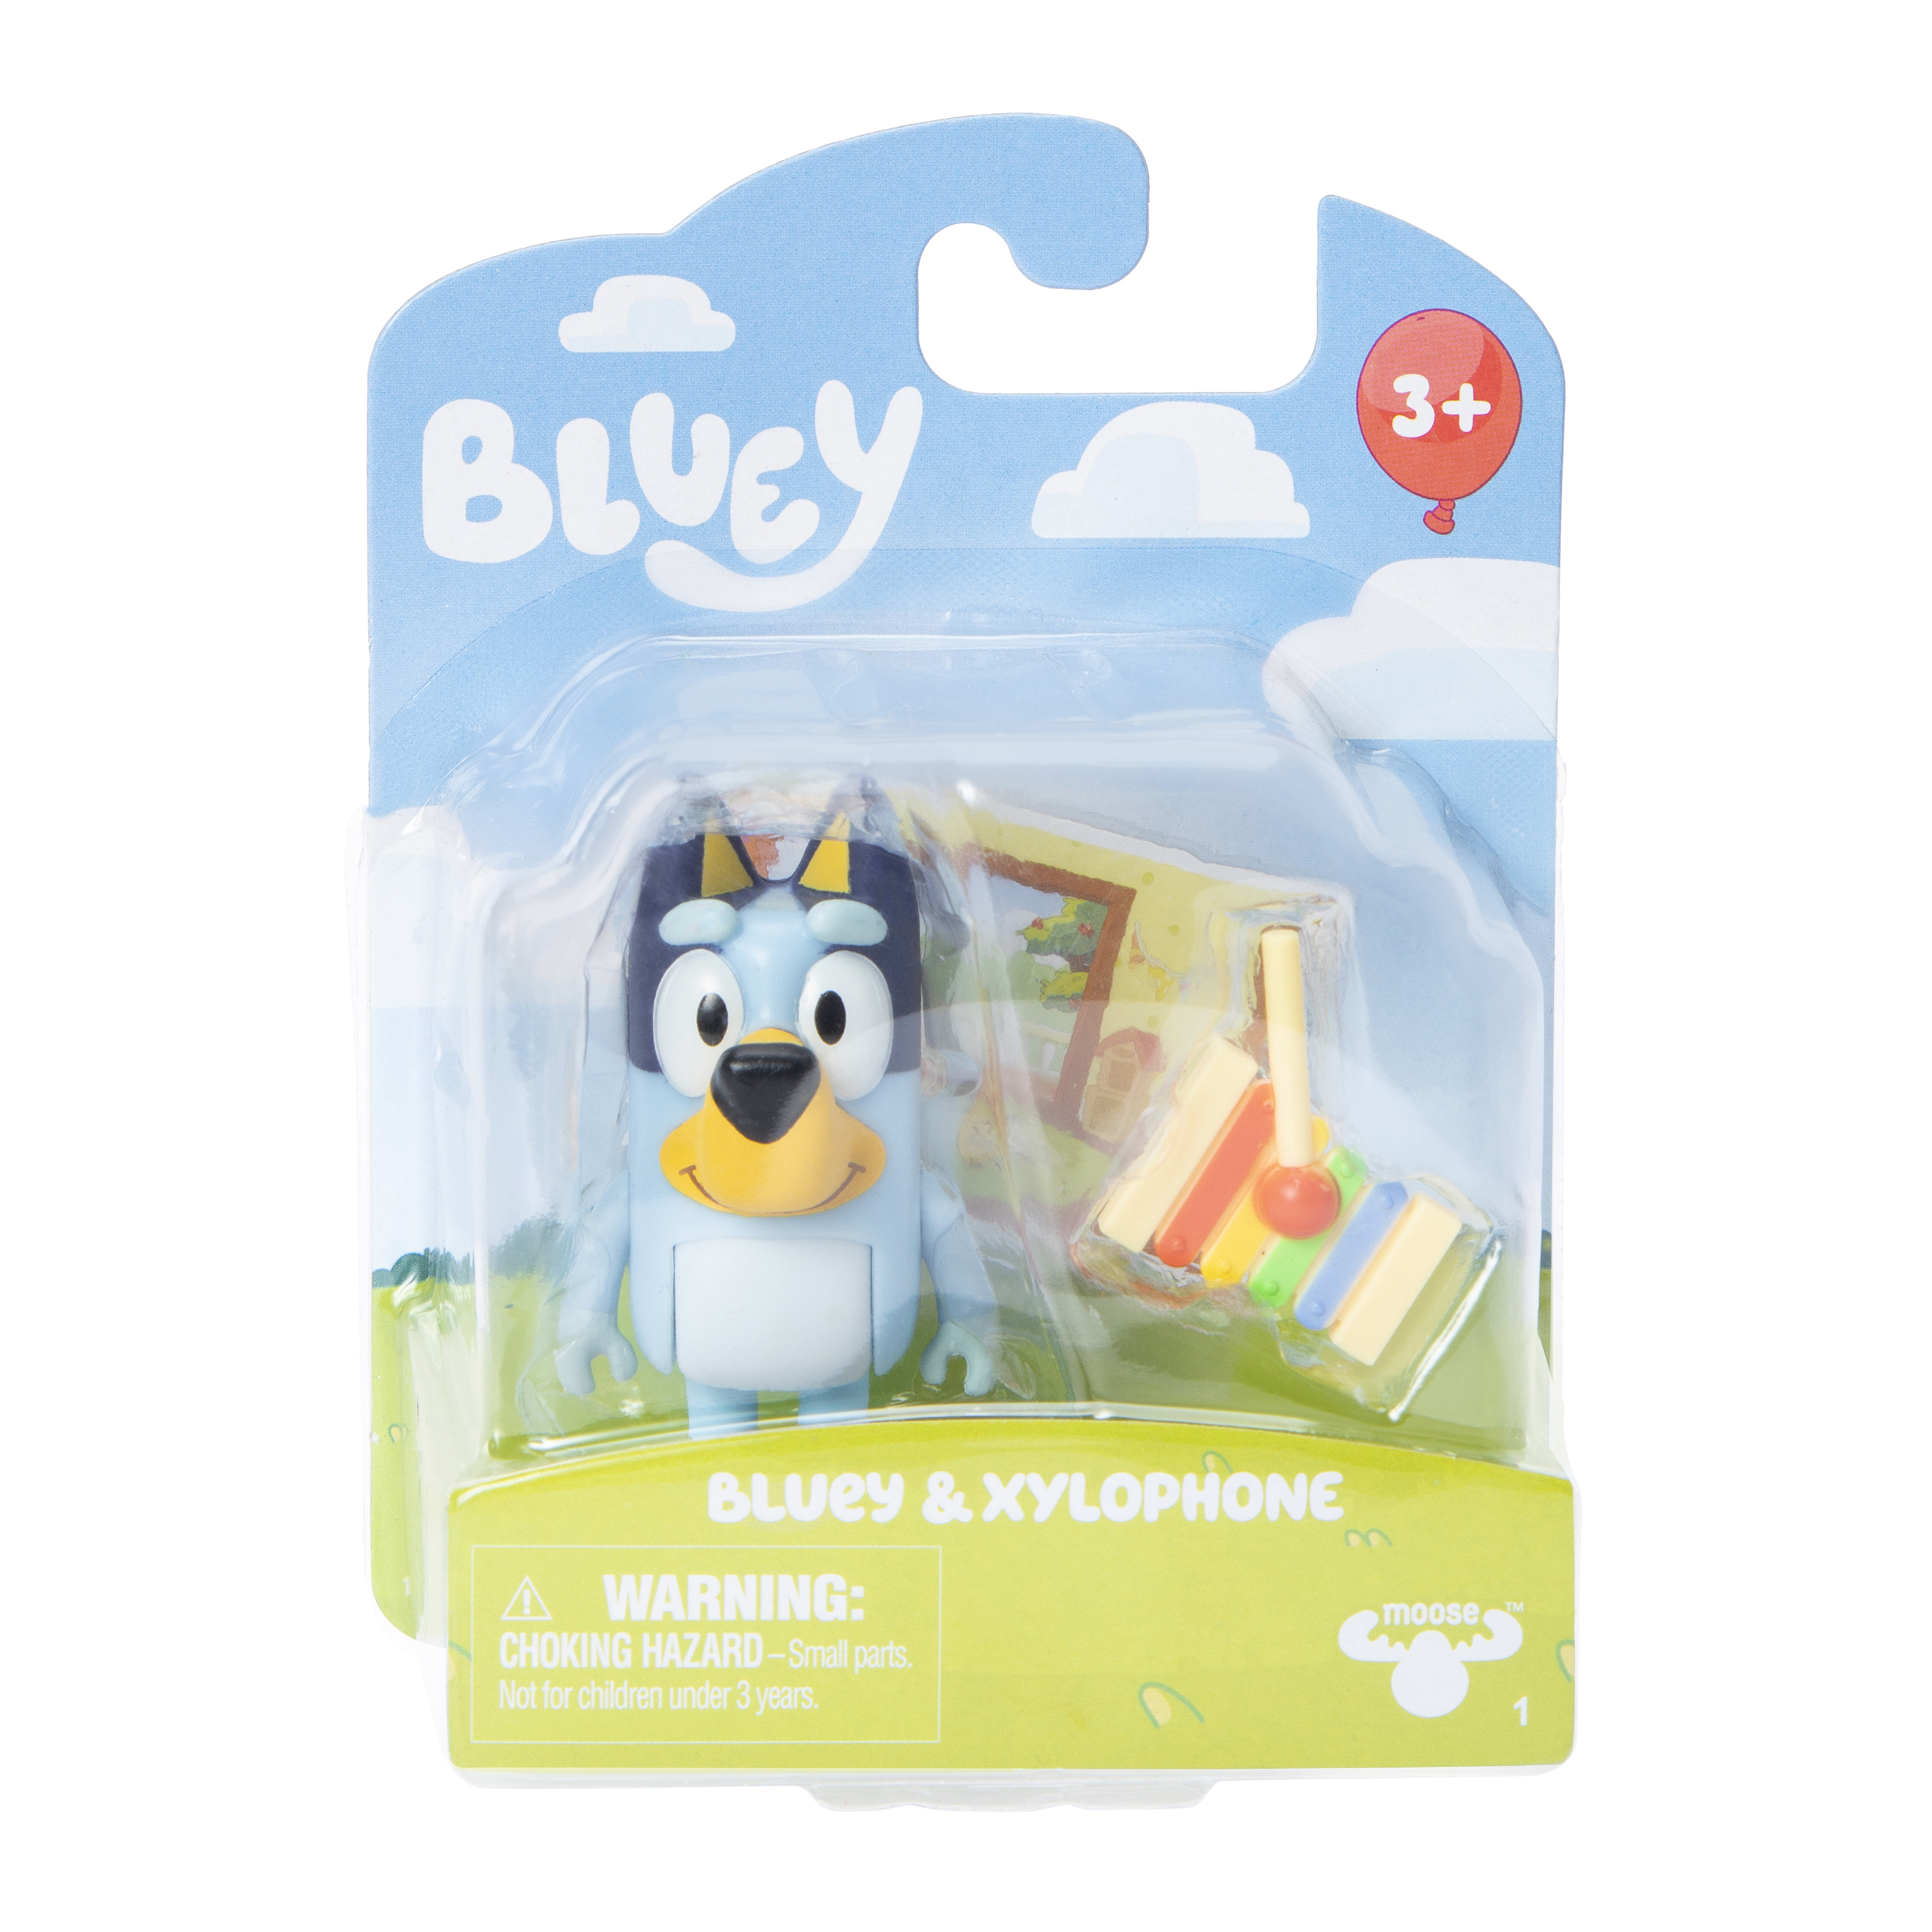 Disney's Bluey Toddler Boy Hooray Bluey & Bingo Graphic Tee